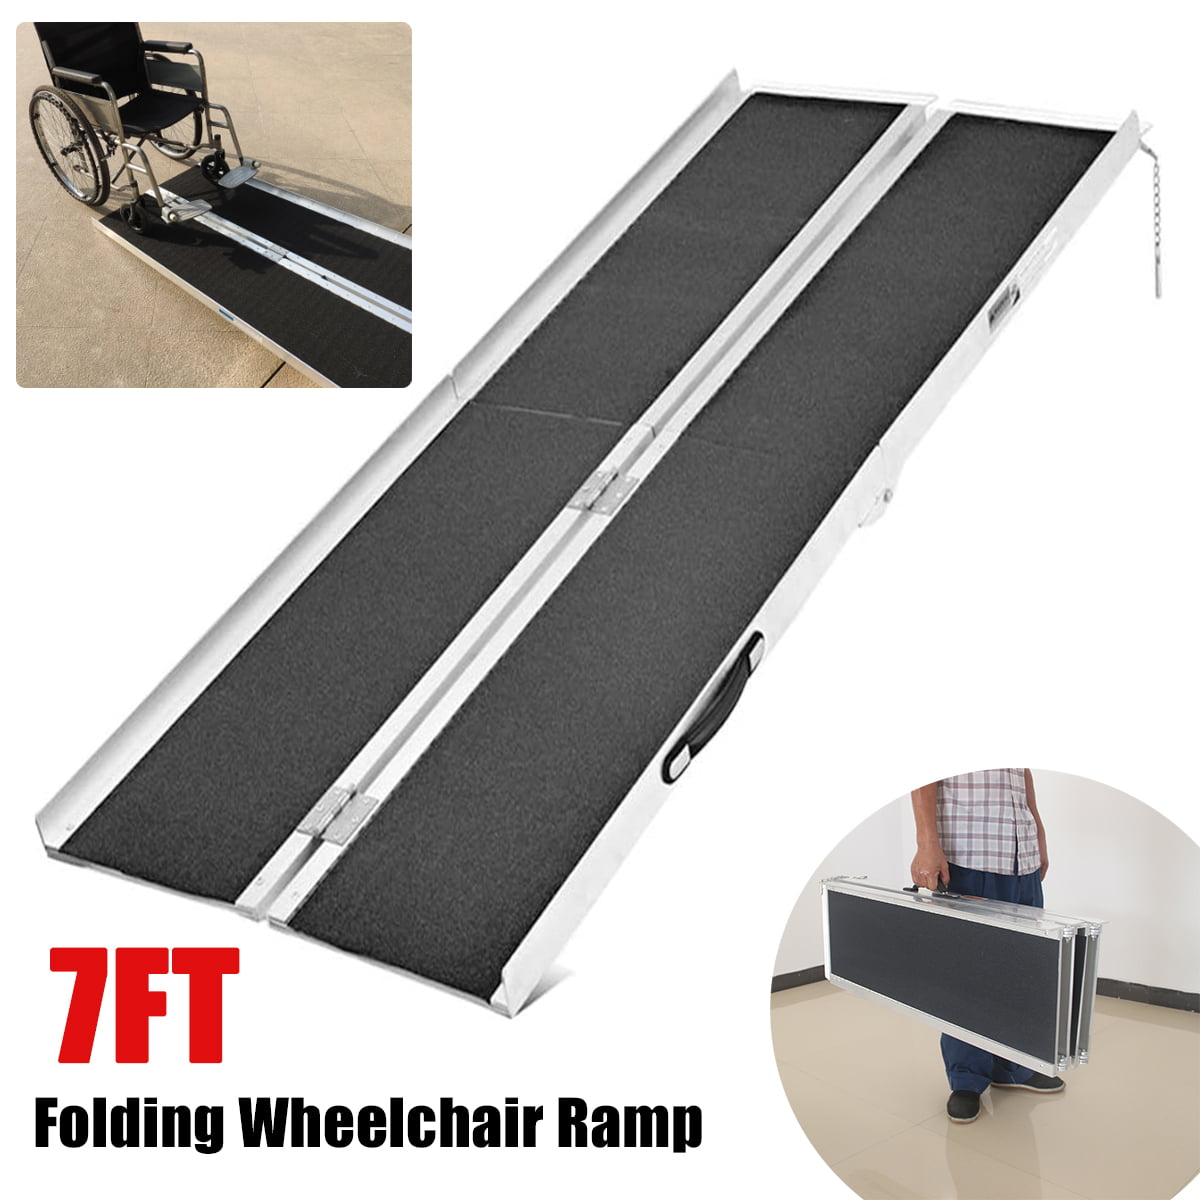 7 Portable Aluminum Non-skid Multifold Wheelchair Ramp